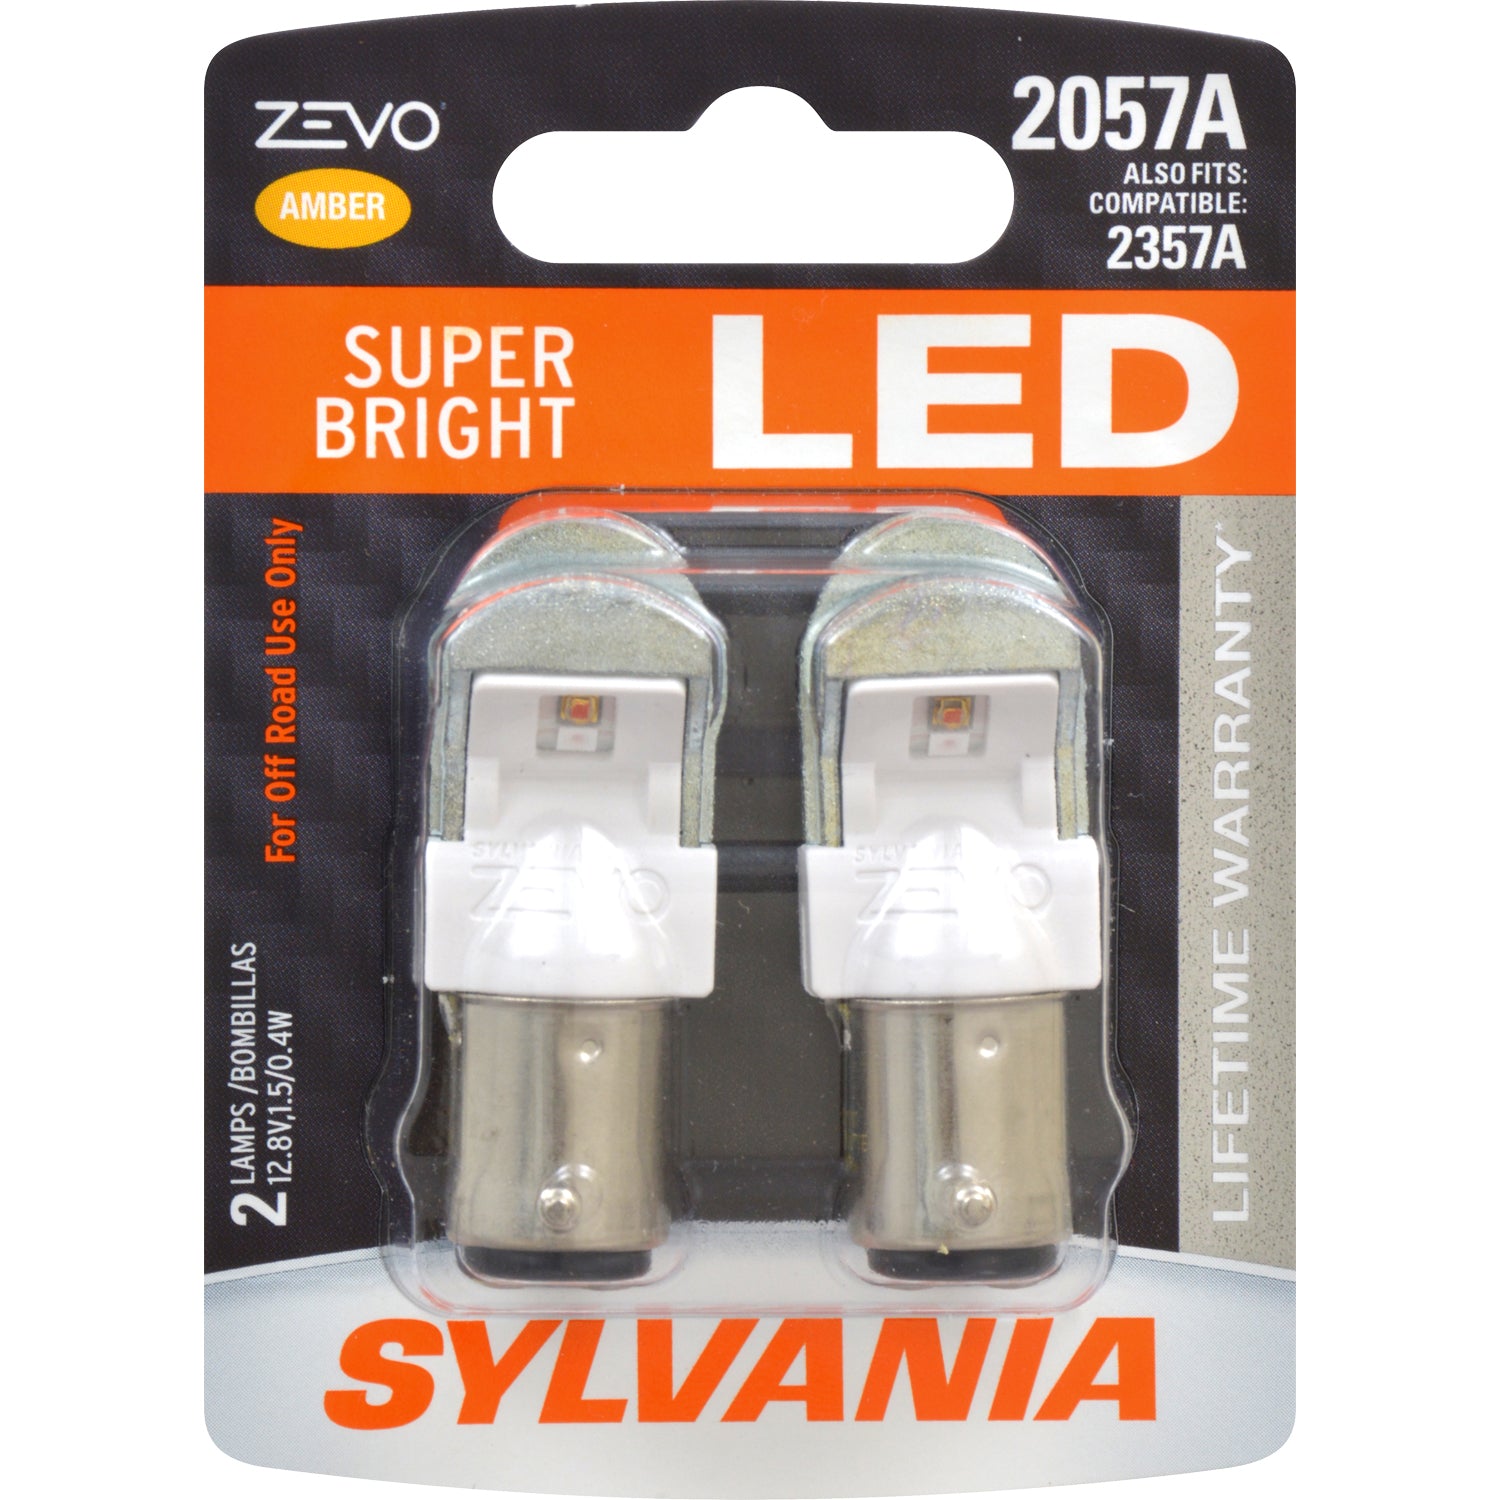 sylvania led lights - 100 results